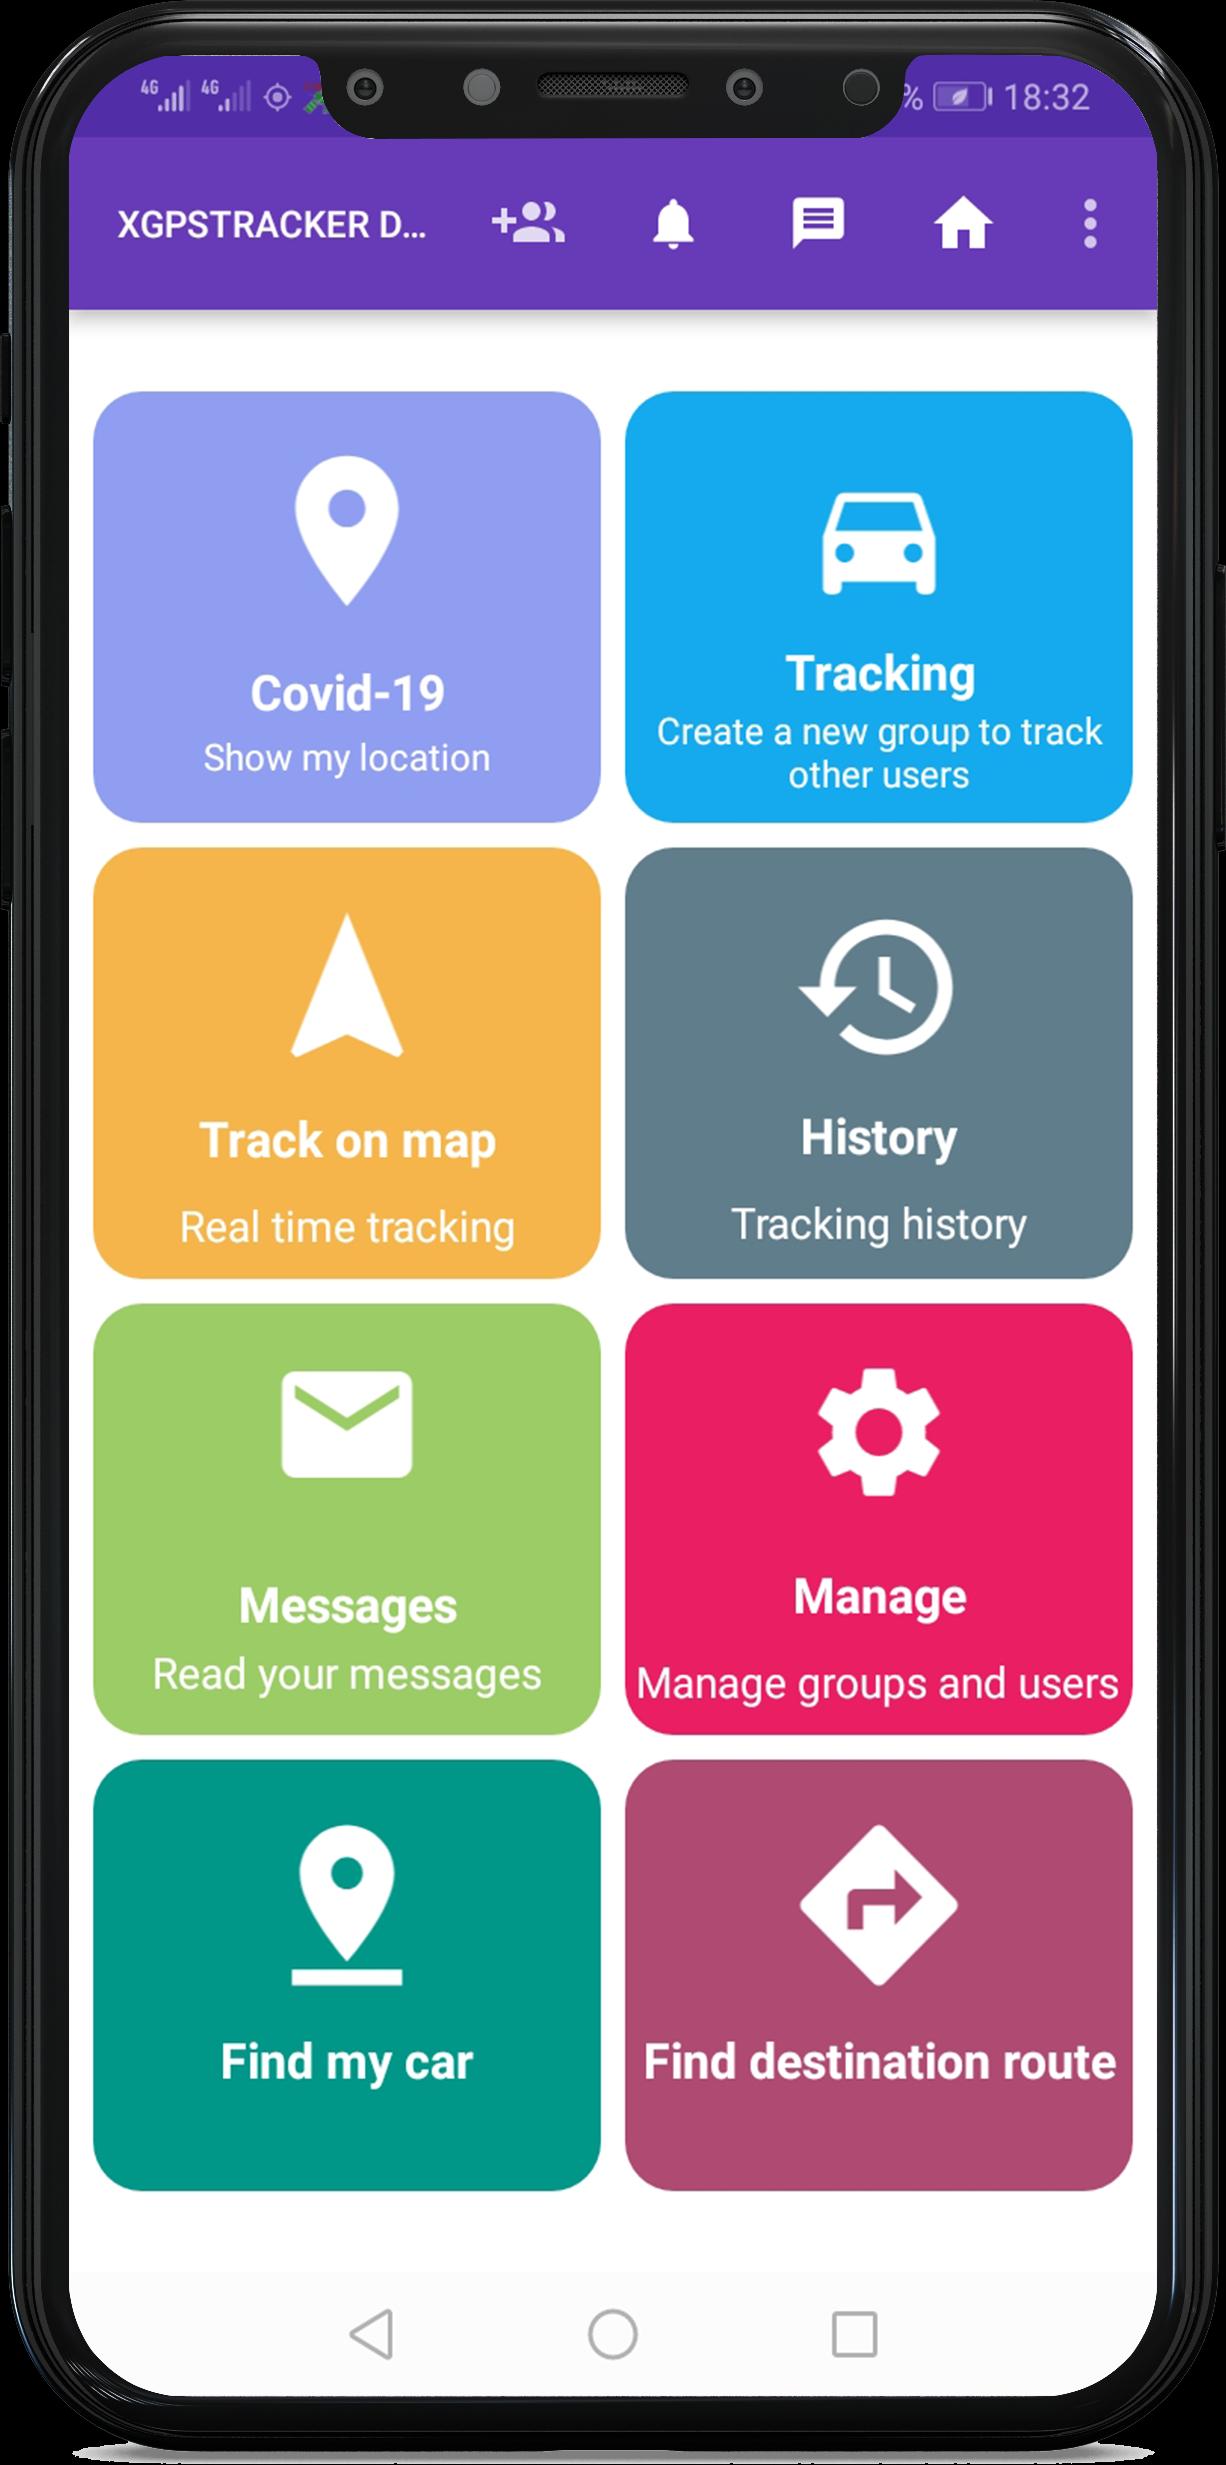 GPS Tracker For Kids  Tracking Device - Findmykids App